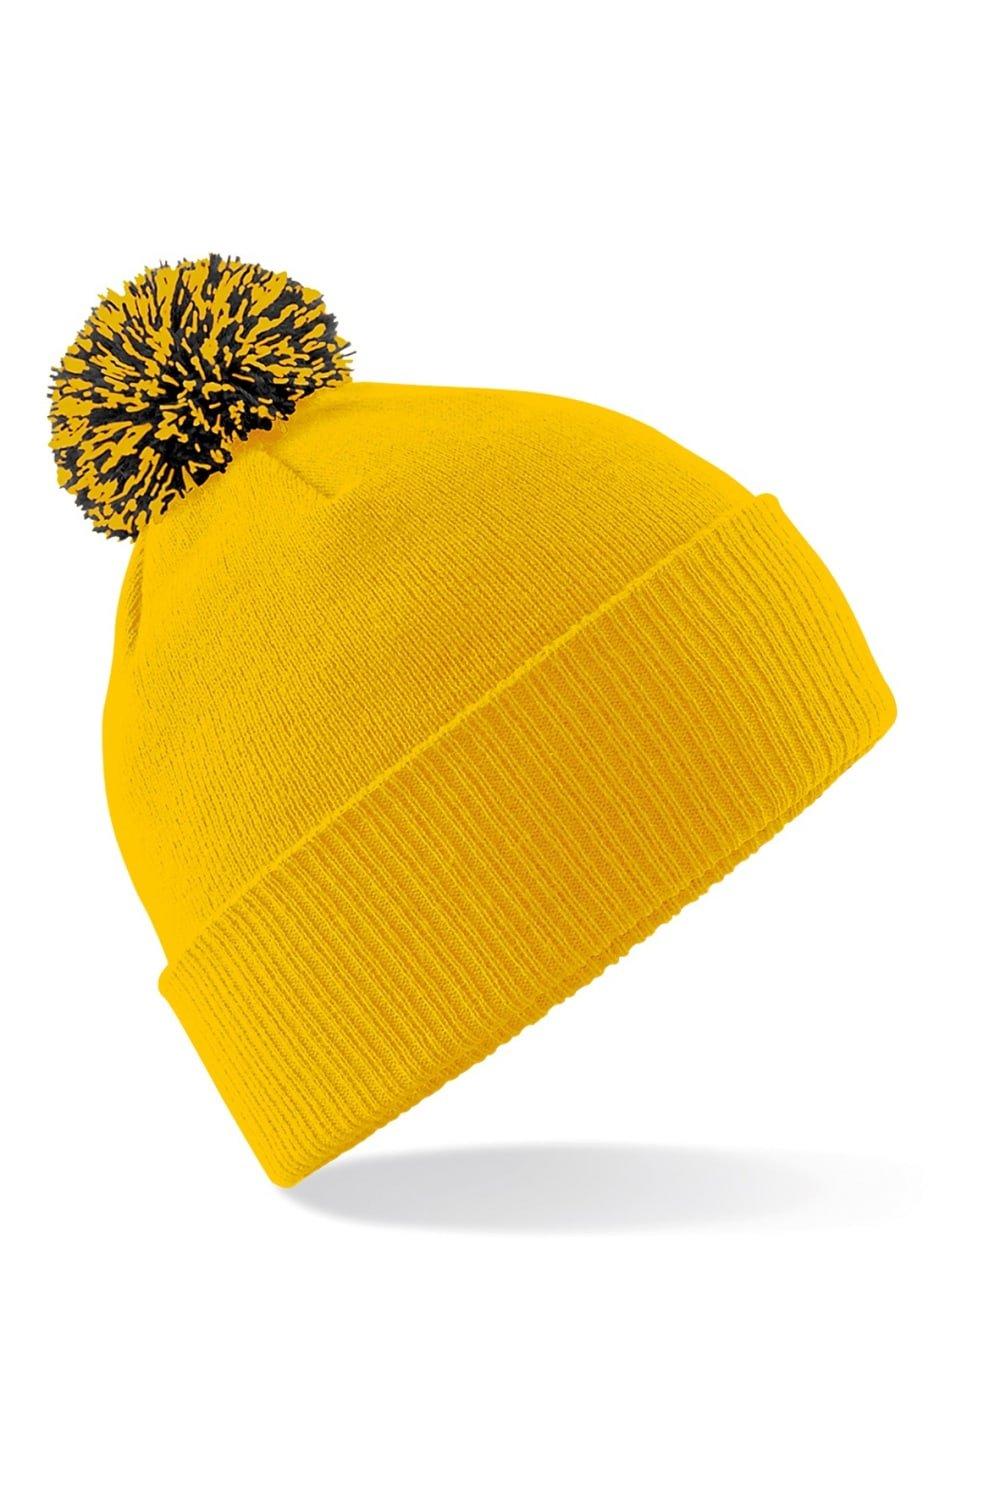 Зимняя шапка Snowstar Duo Extreme Beechfield, желтый зимняя шапка snowstar duo extreme beechfield серый